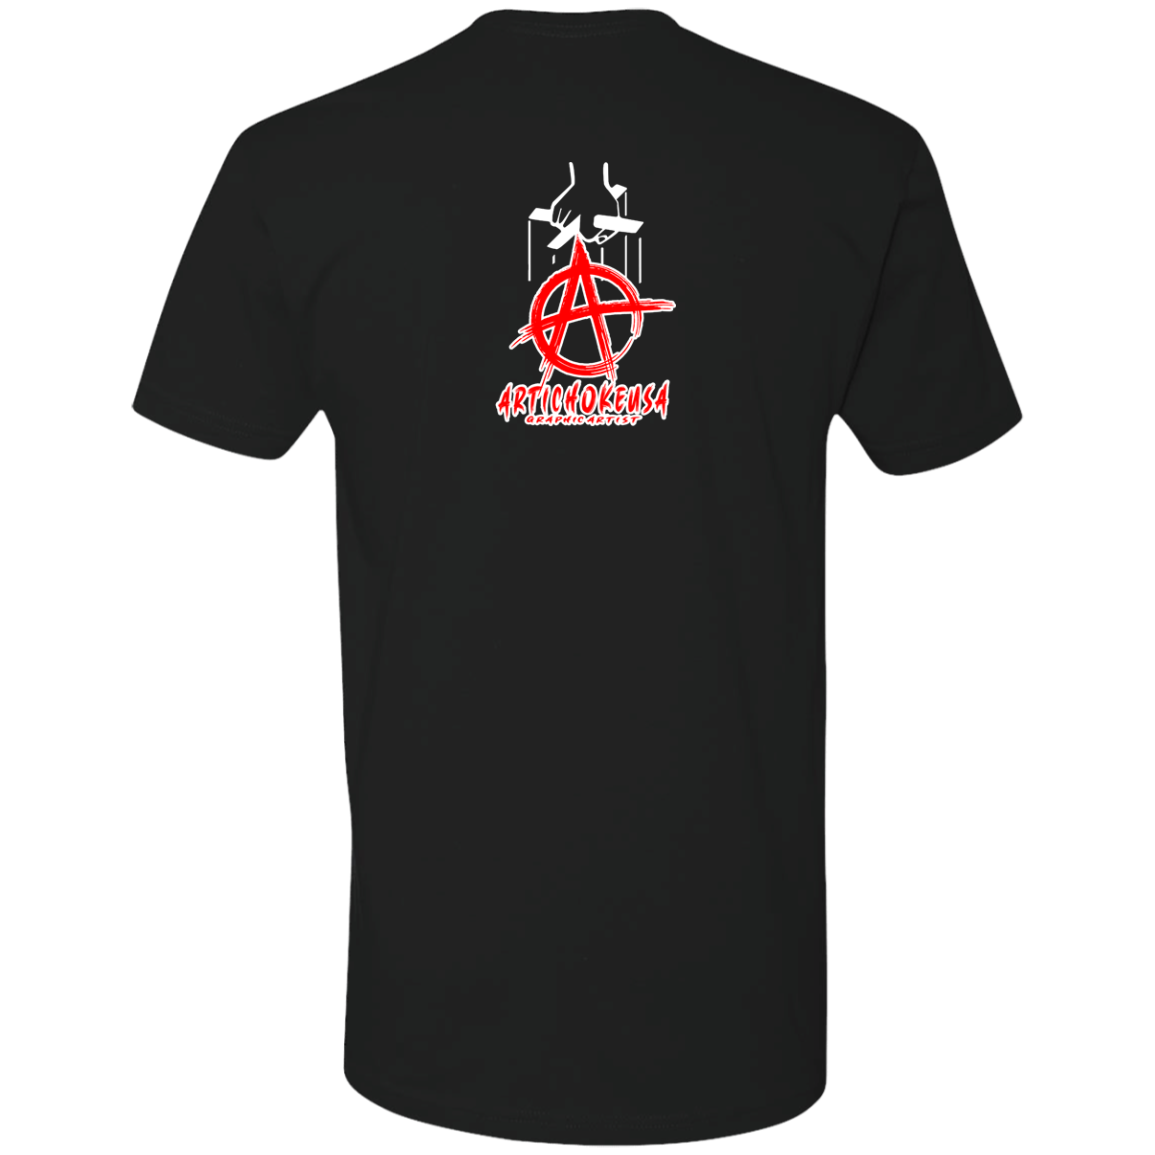 ArtichokeUSA Custom Design. Godfather Simms. NY Giants Superbowl XXI Champions. Fan Art. Ultra Soft Cotton T-Shirt